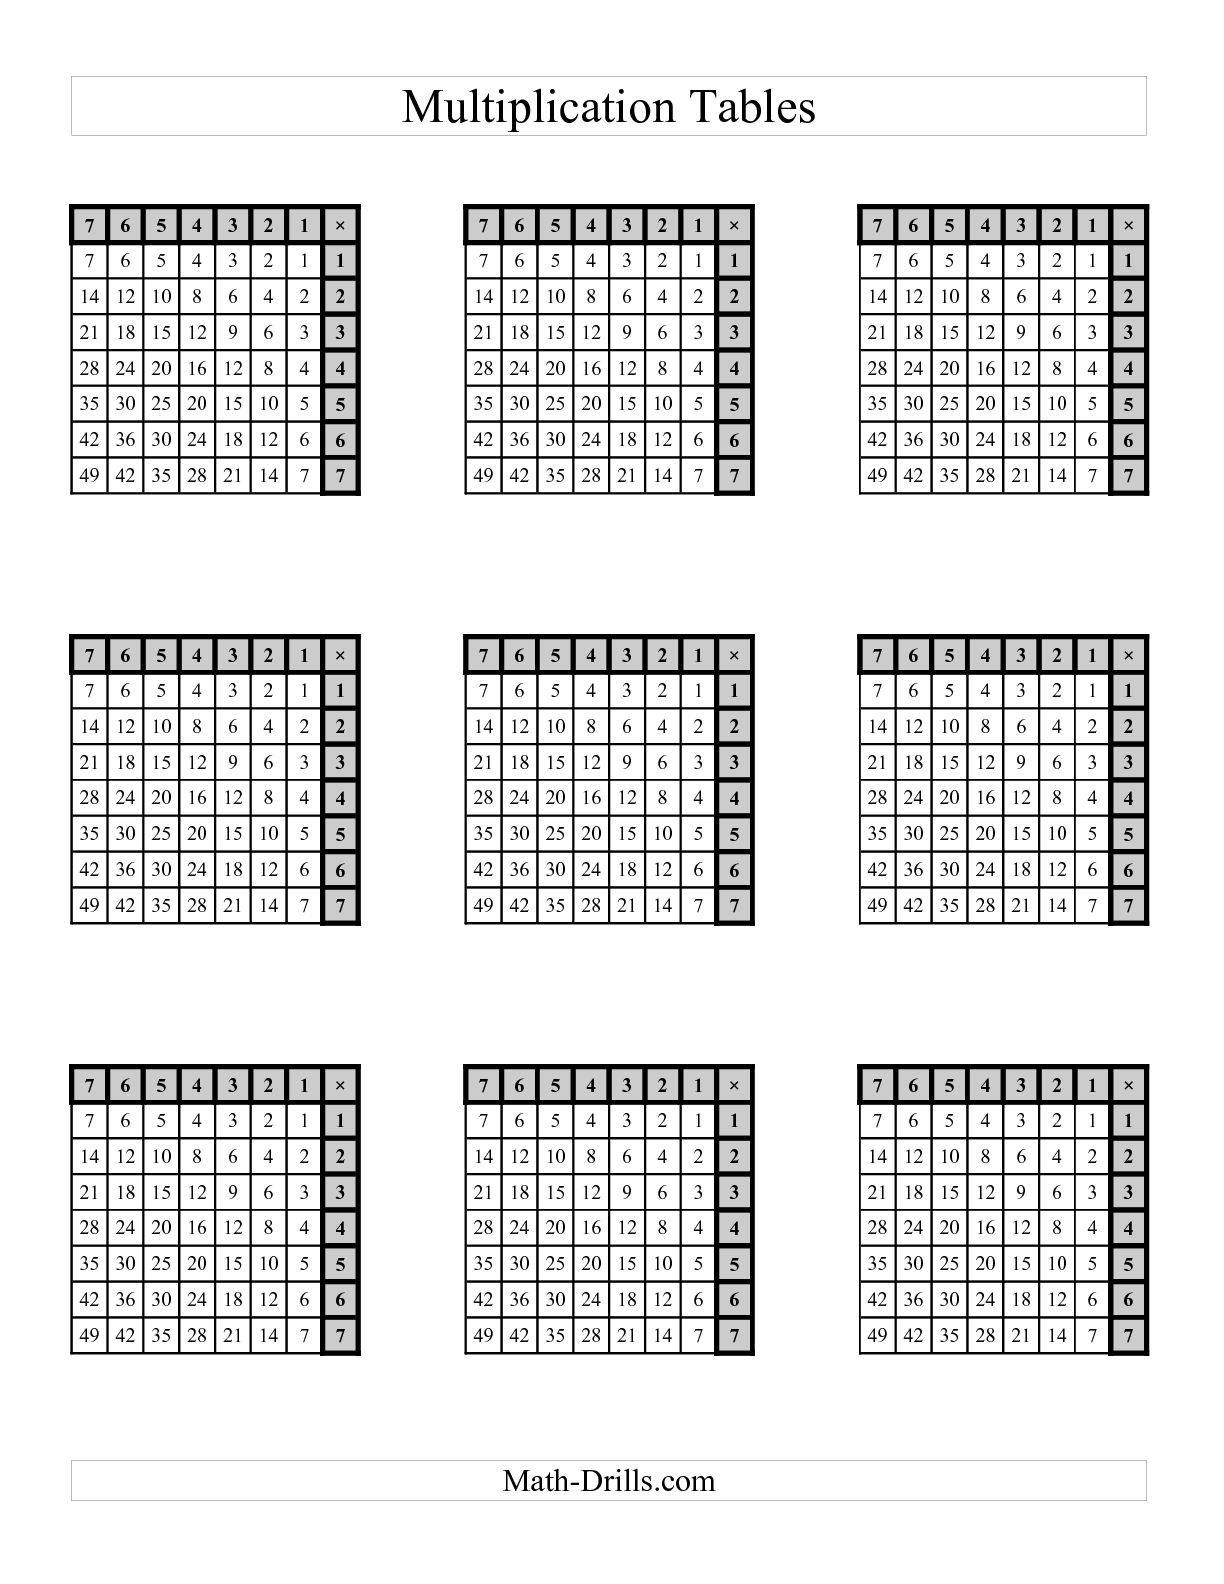 Download Multiplication tables worksheet printable